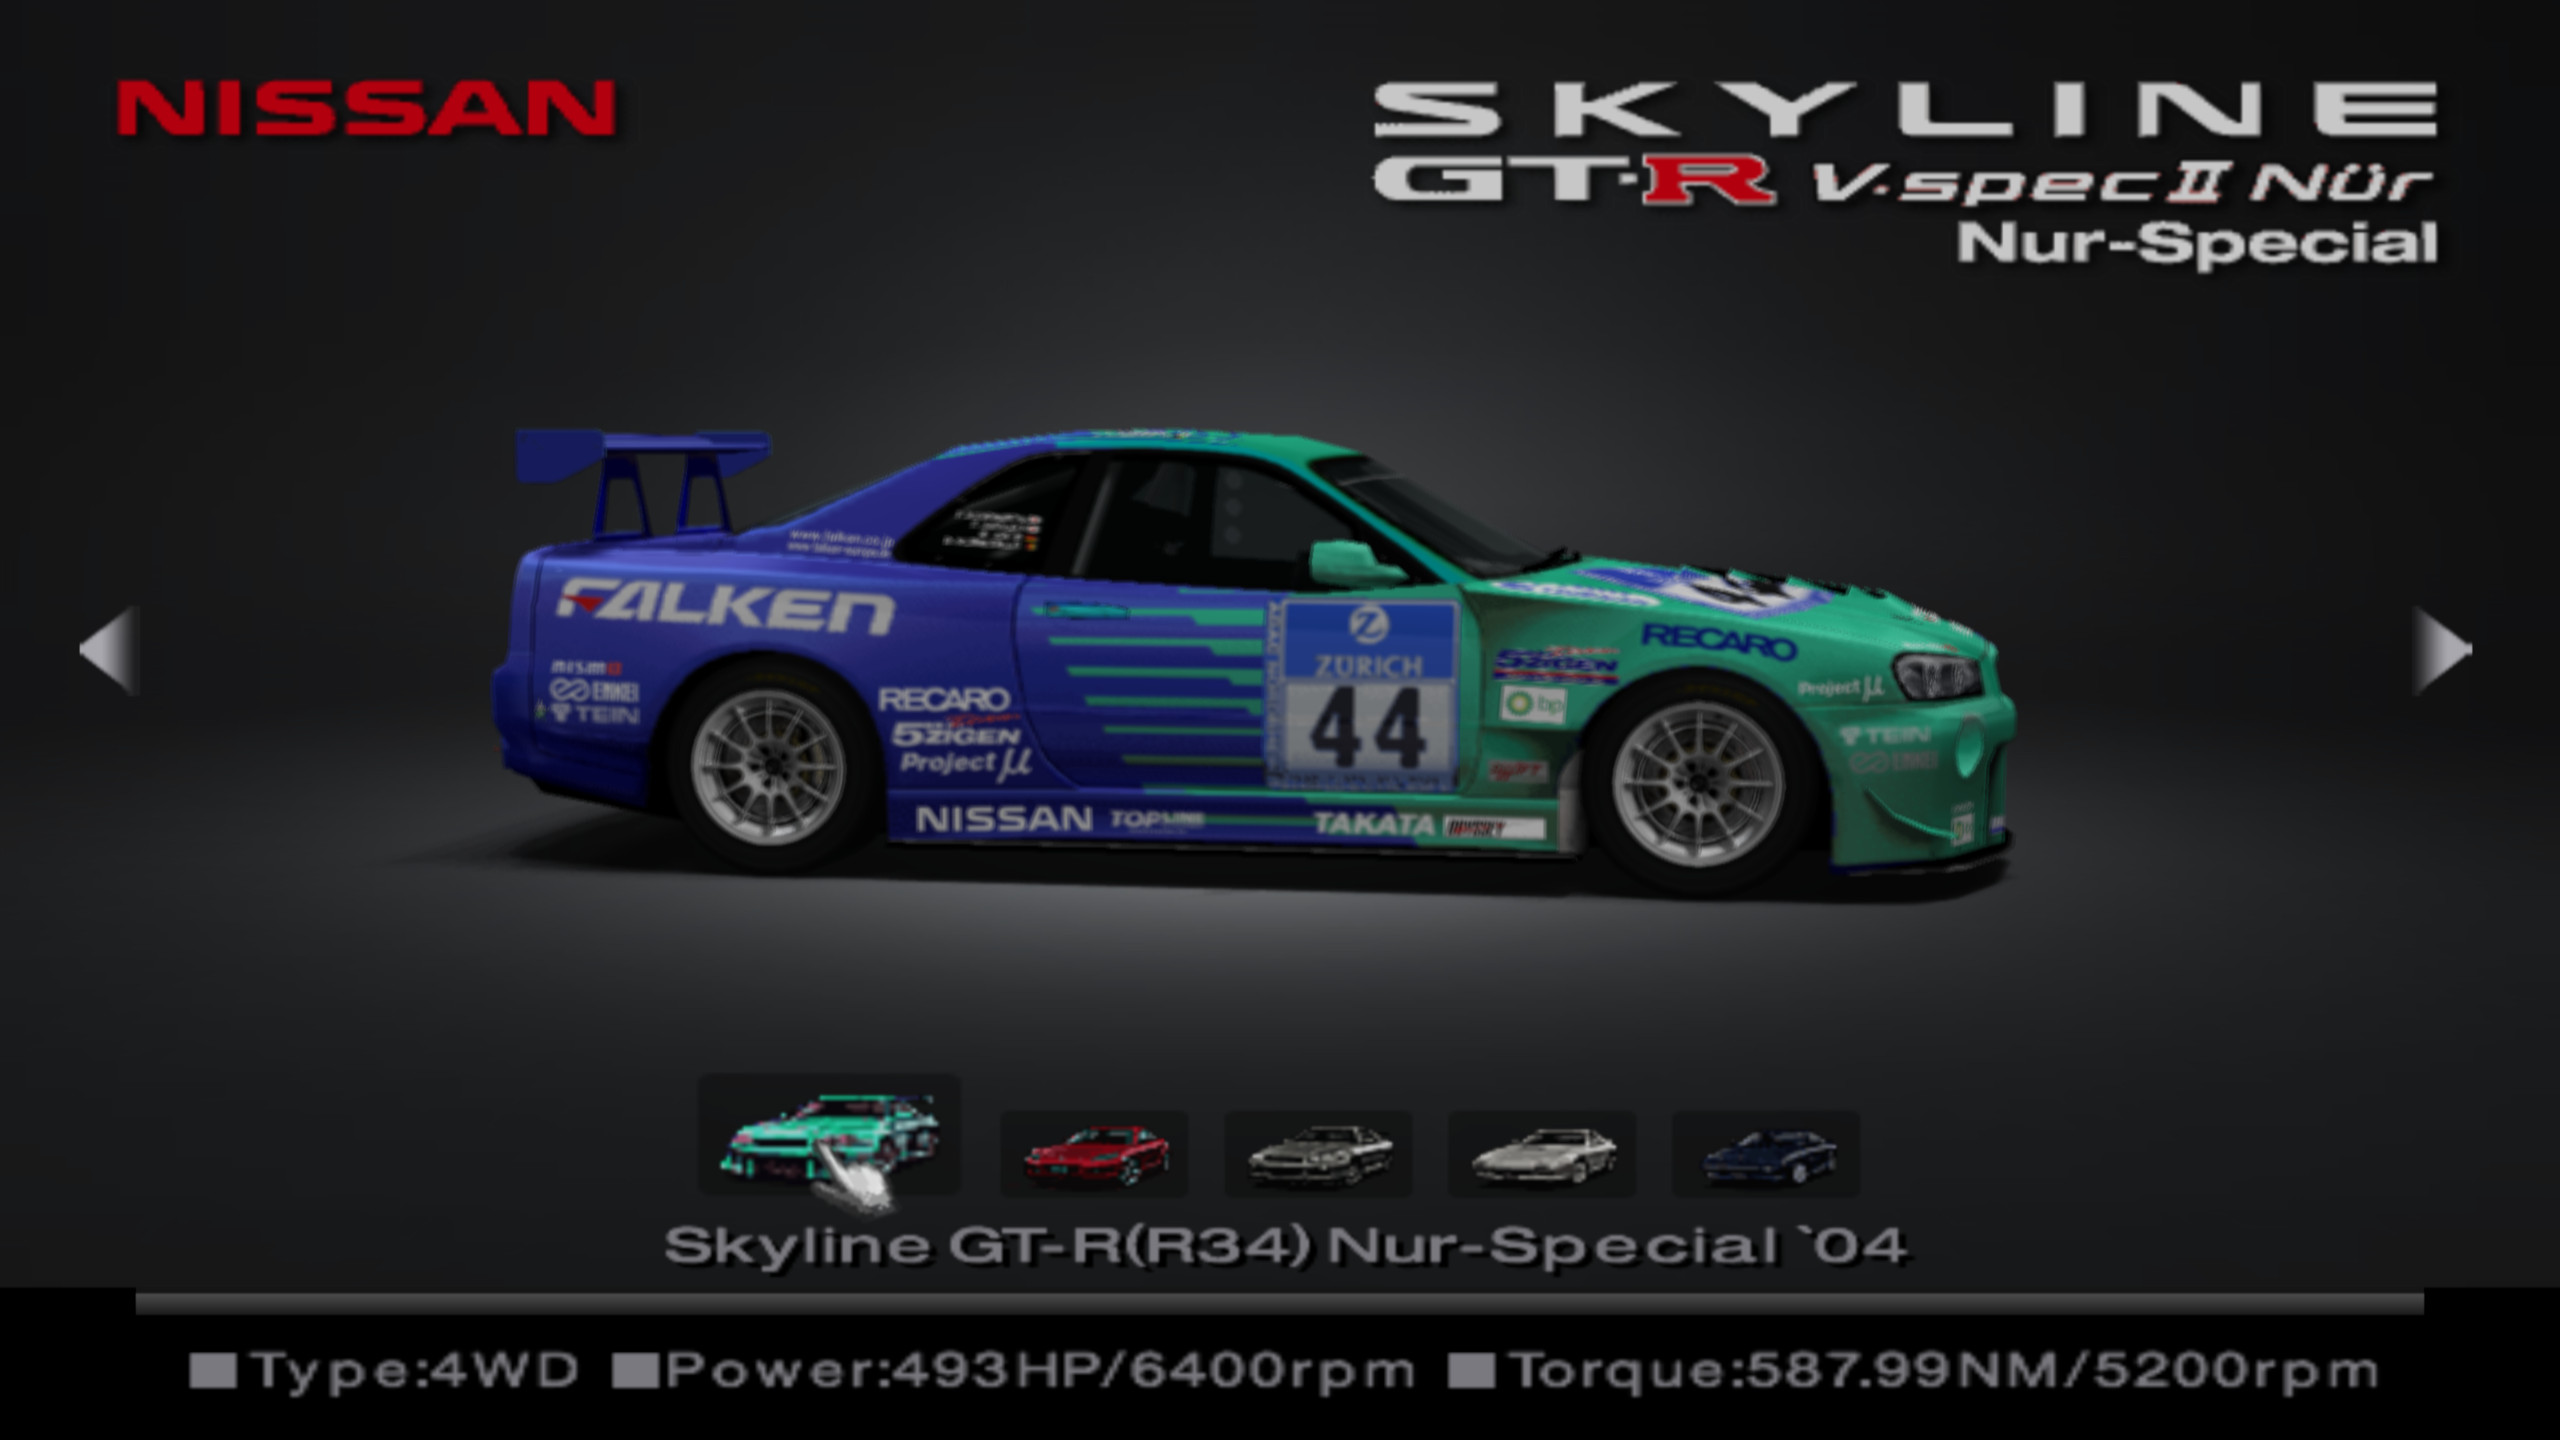 Gran Turismo 4 Gran Turismo Skyline GT-R Gameplay HD (PS2)